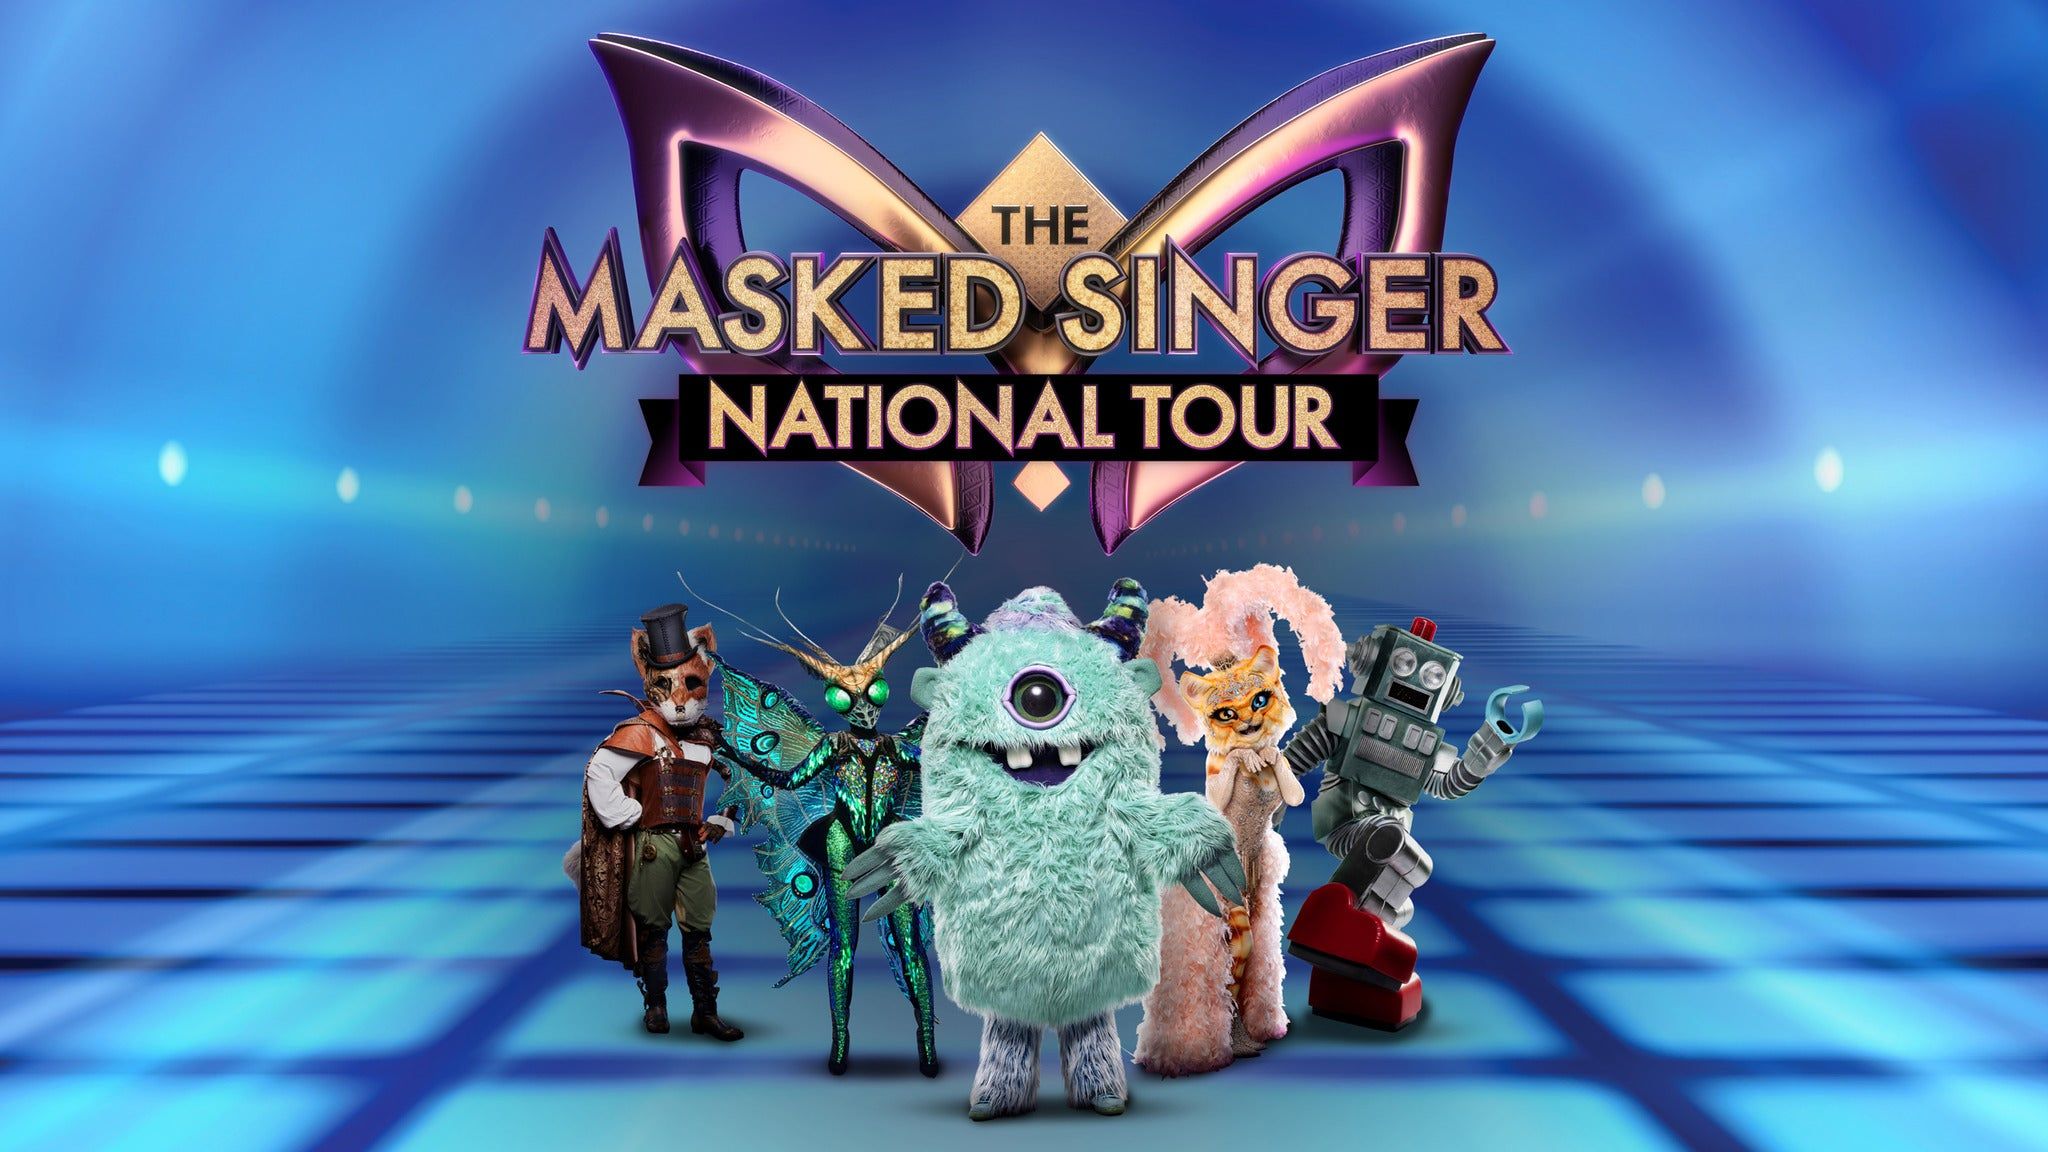 The Masked Singer National Tour Tickets, 2020 2021 Concert Tour Dates